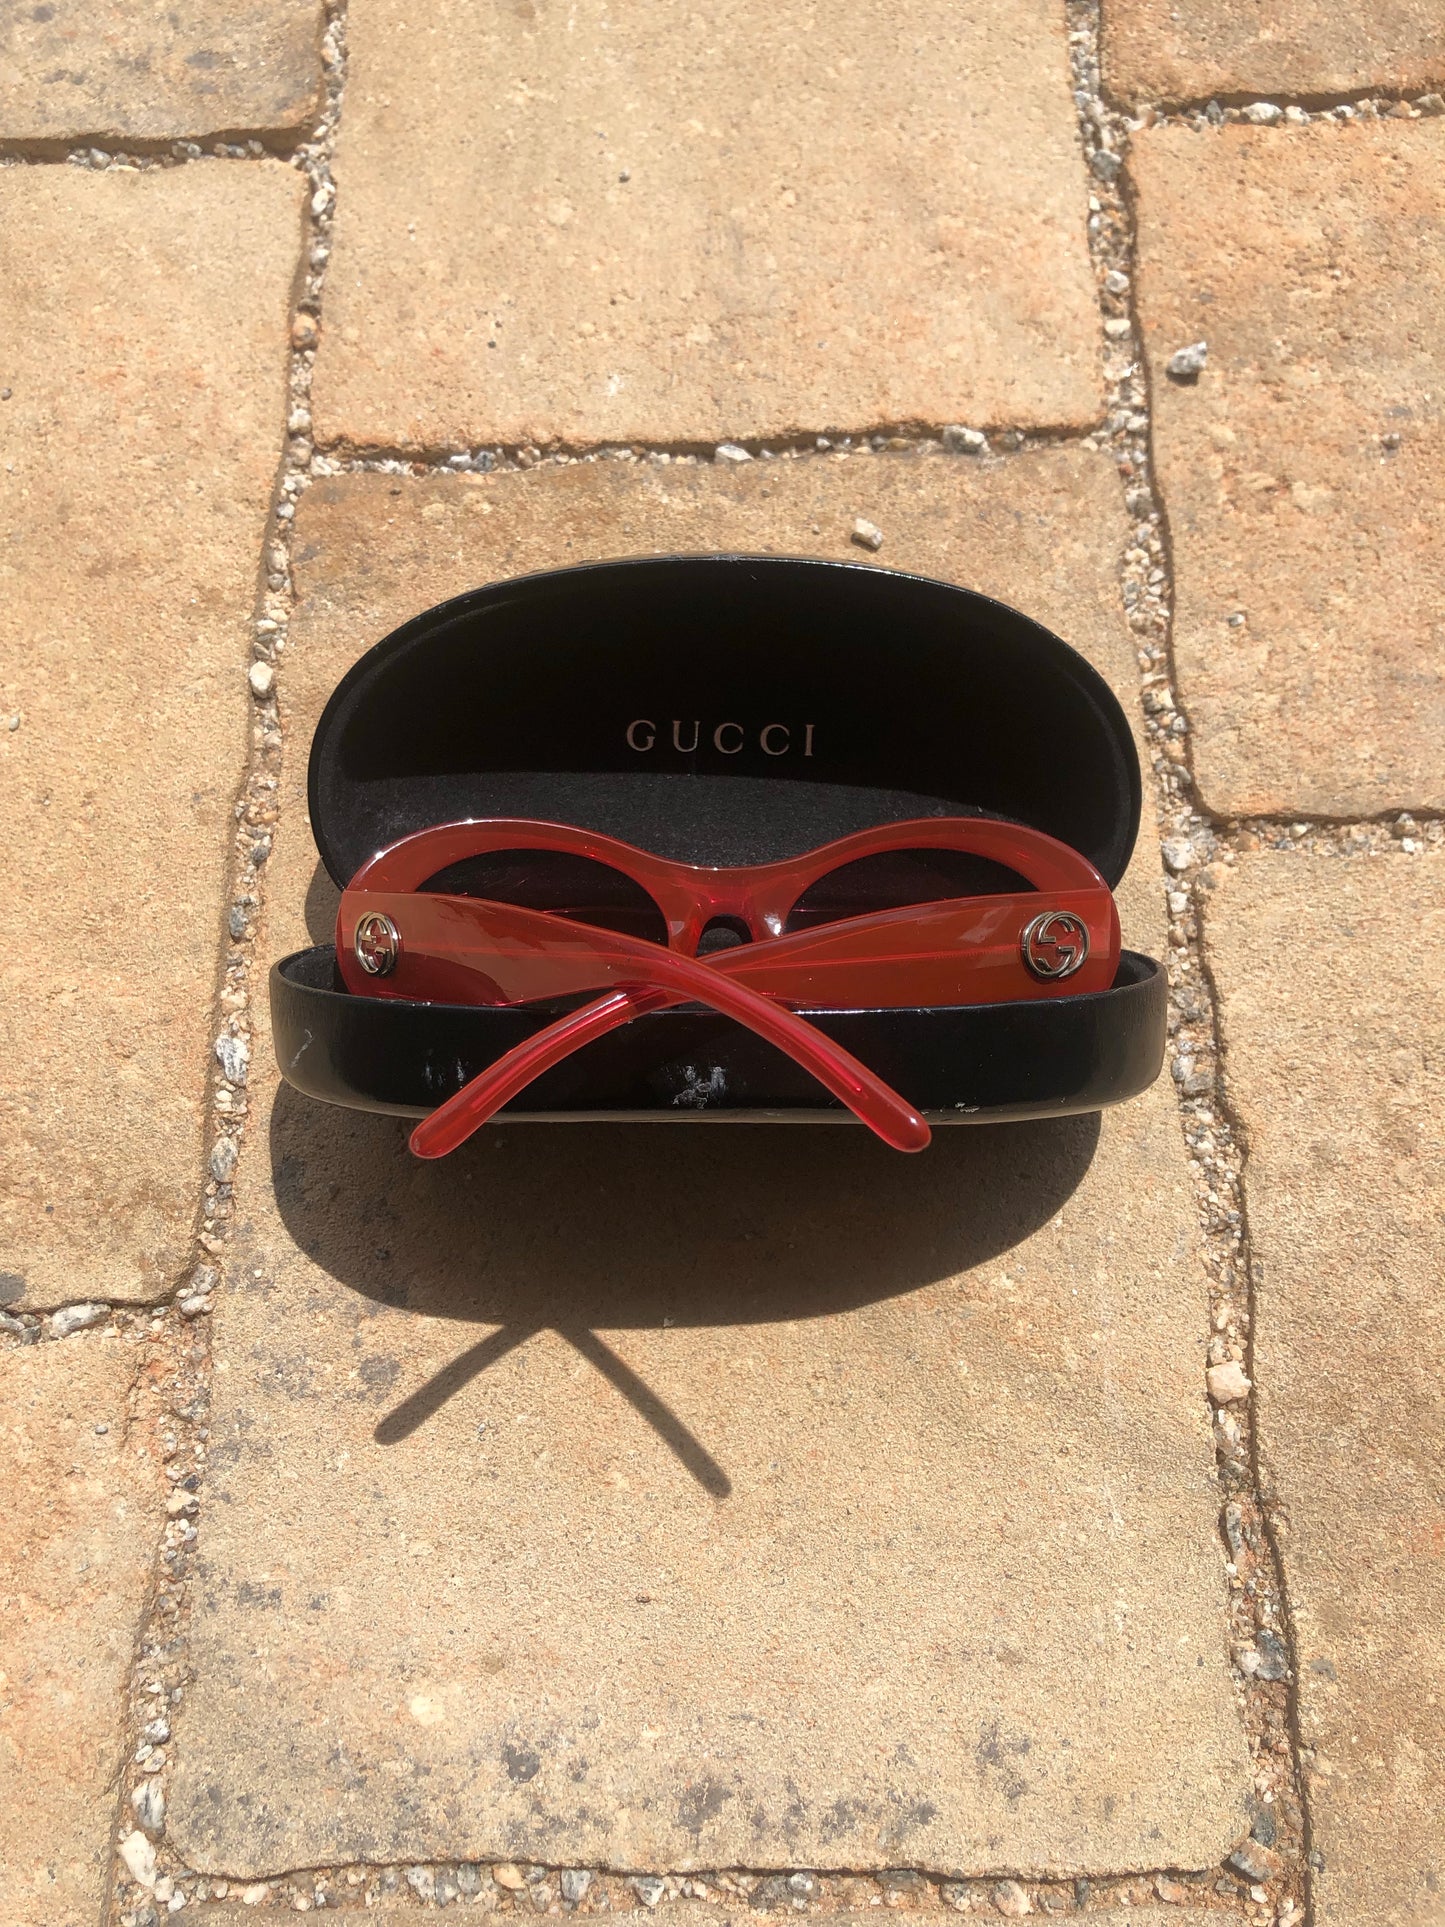 Gucci Kurt Cobain Style Red Sunglasses